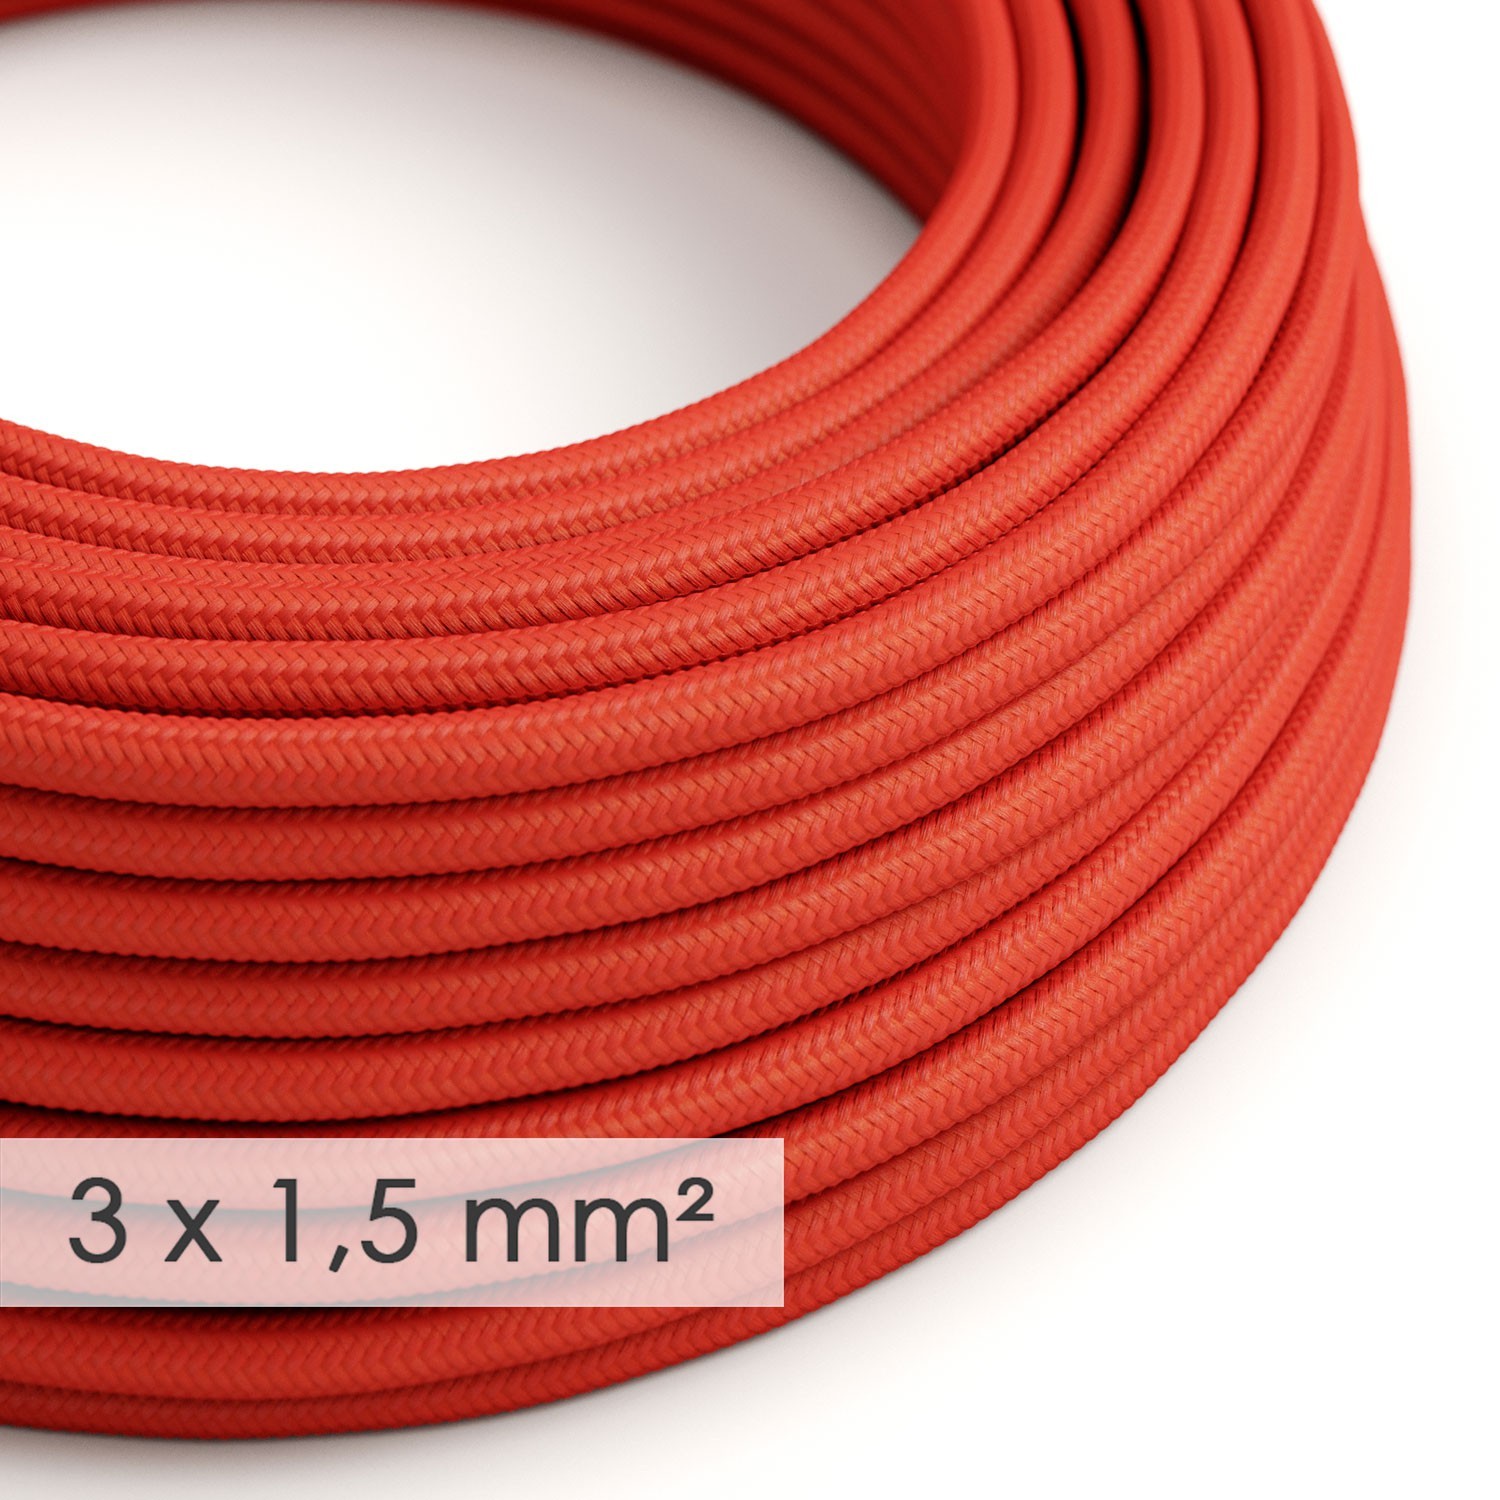 Okrogel kabel večjega preseka (3x1,50) - rdeč RM09